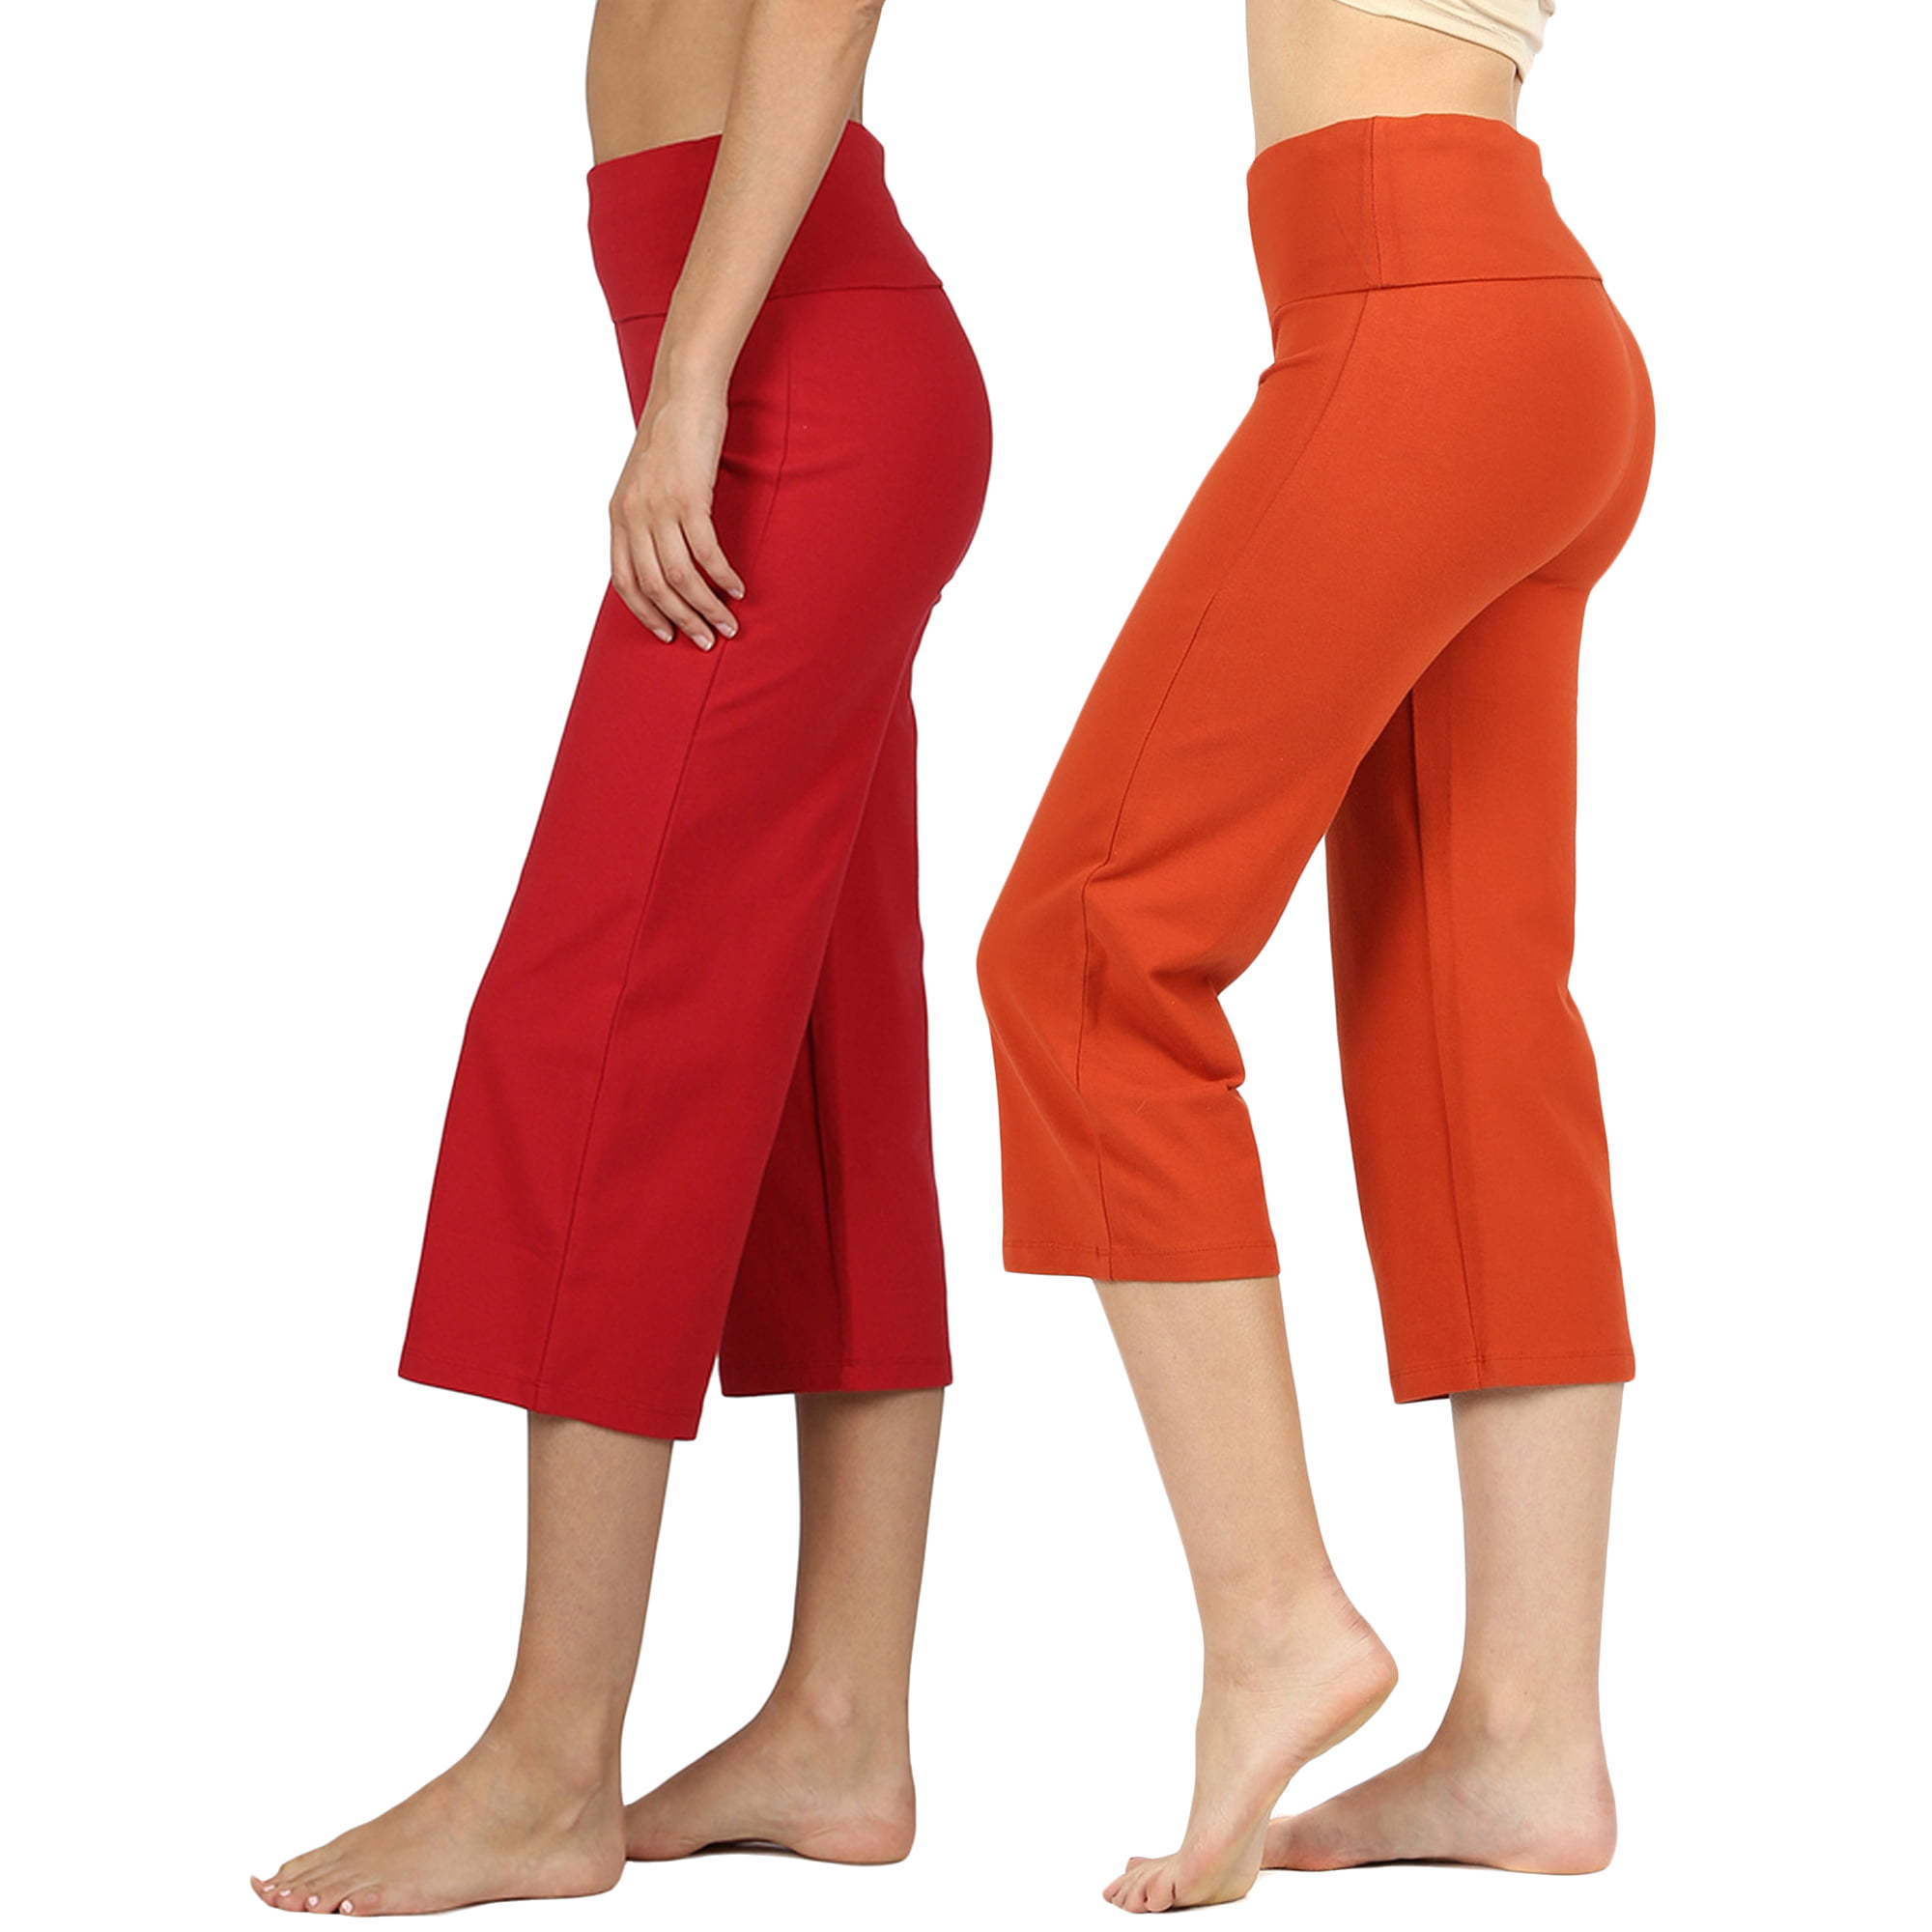 Buy Alki'i Women's Cotton Lycra Fold over Yoga Pant Online at